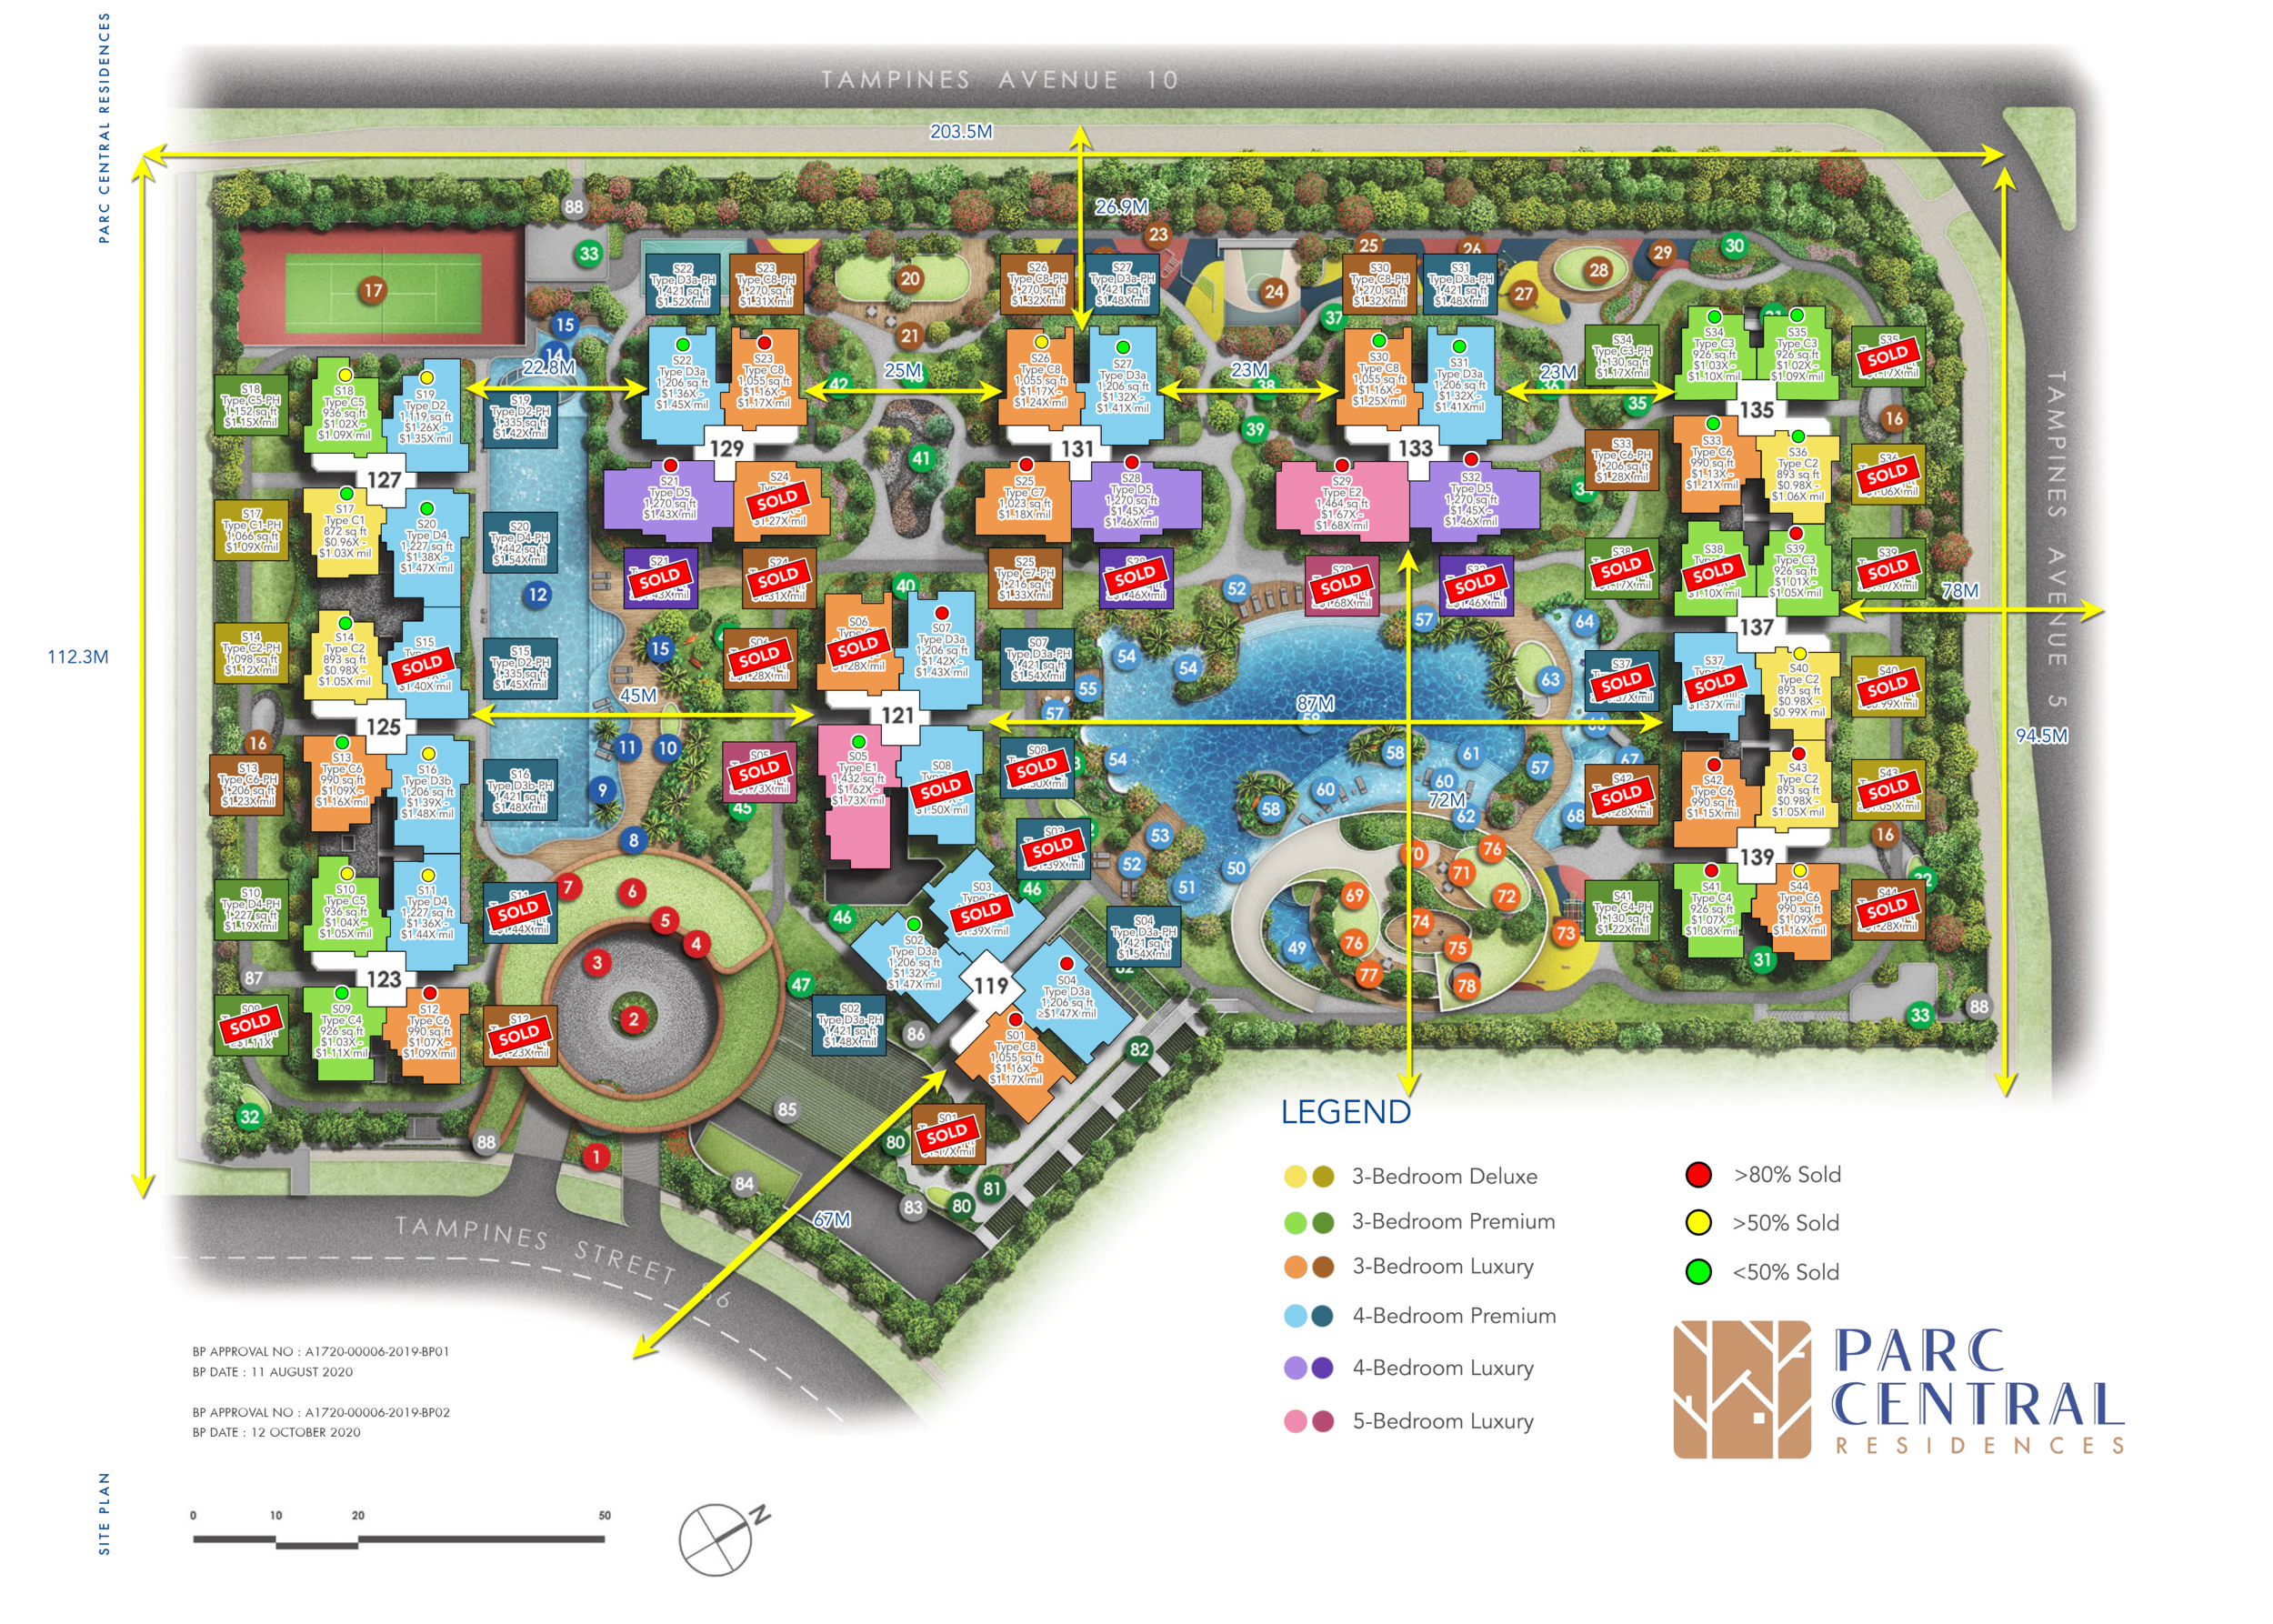 Sale Status Parc central price map.png